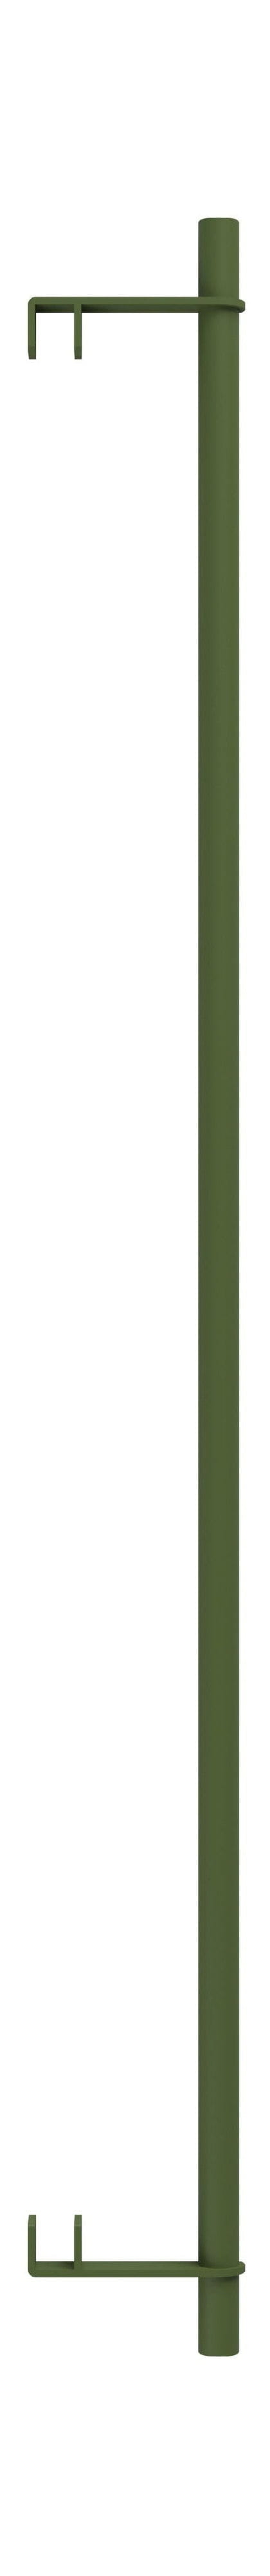 Moebe Sheveling System/Wall Sheveling Clothing Bar 85 cm, fyren grön